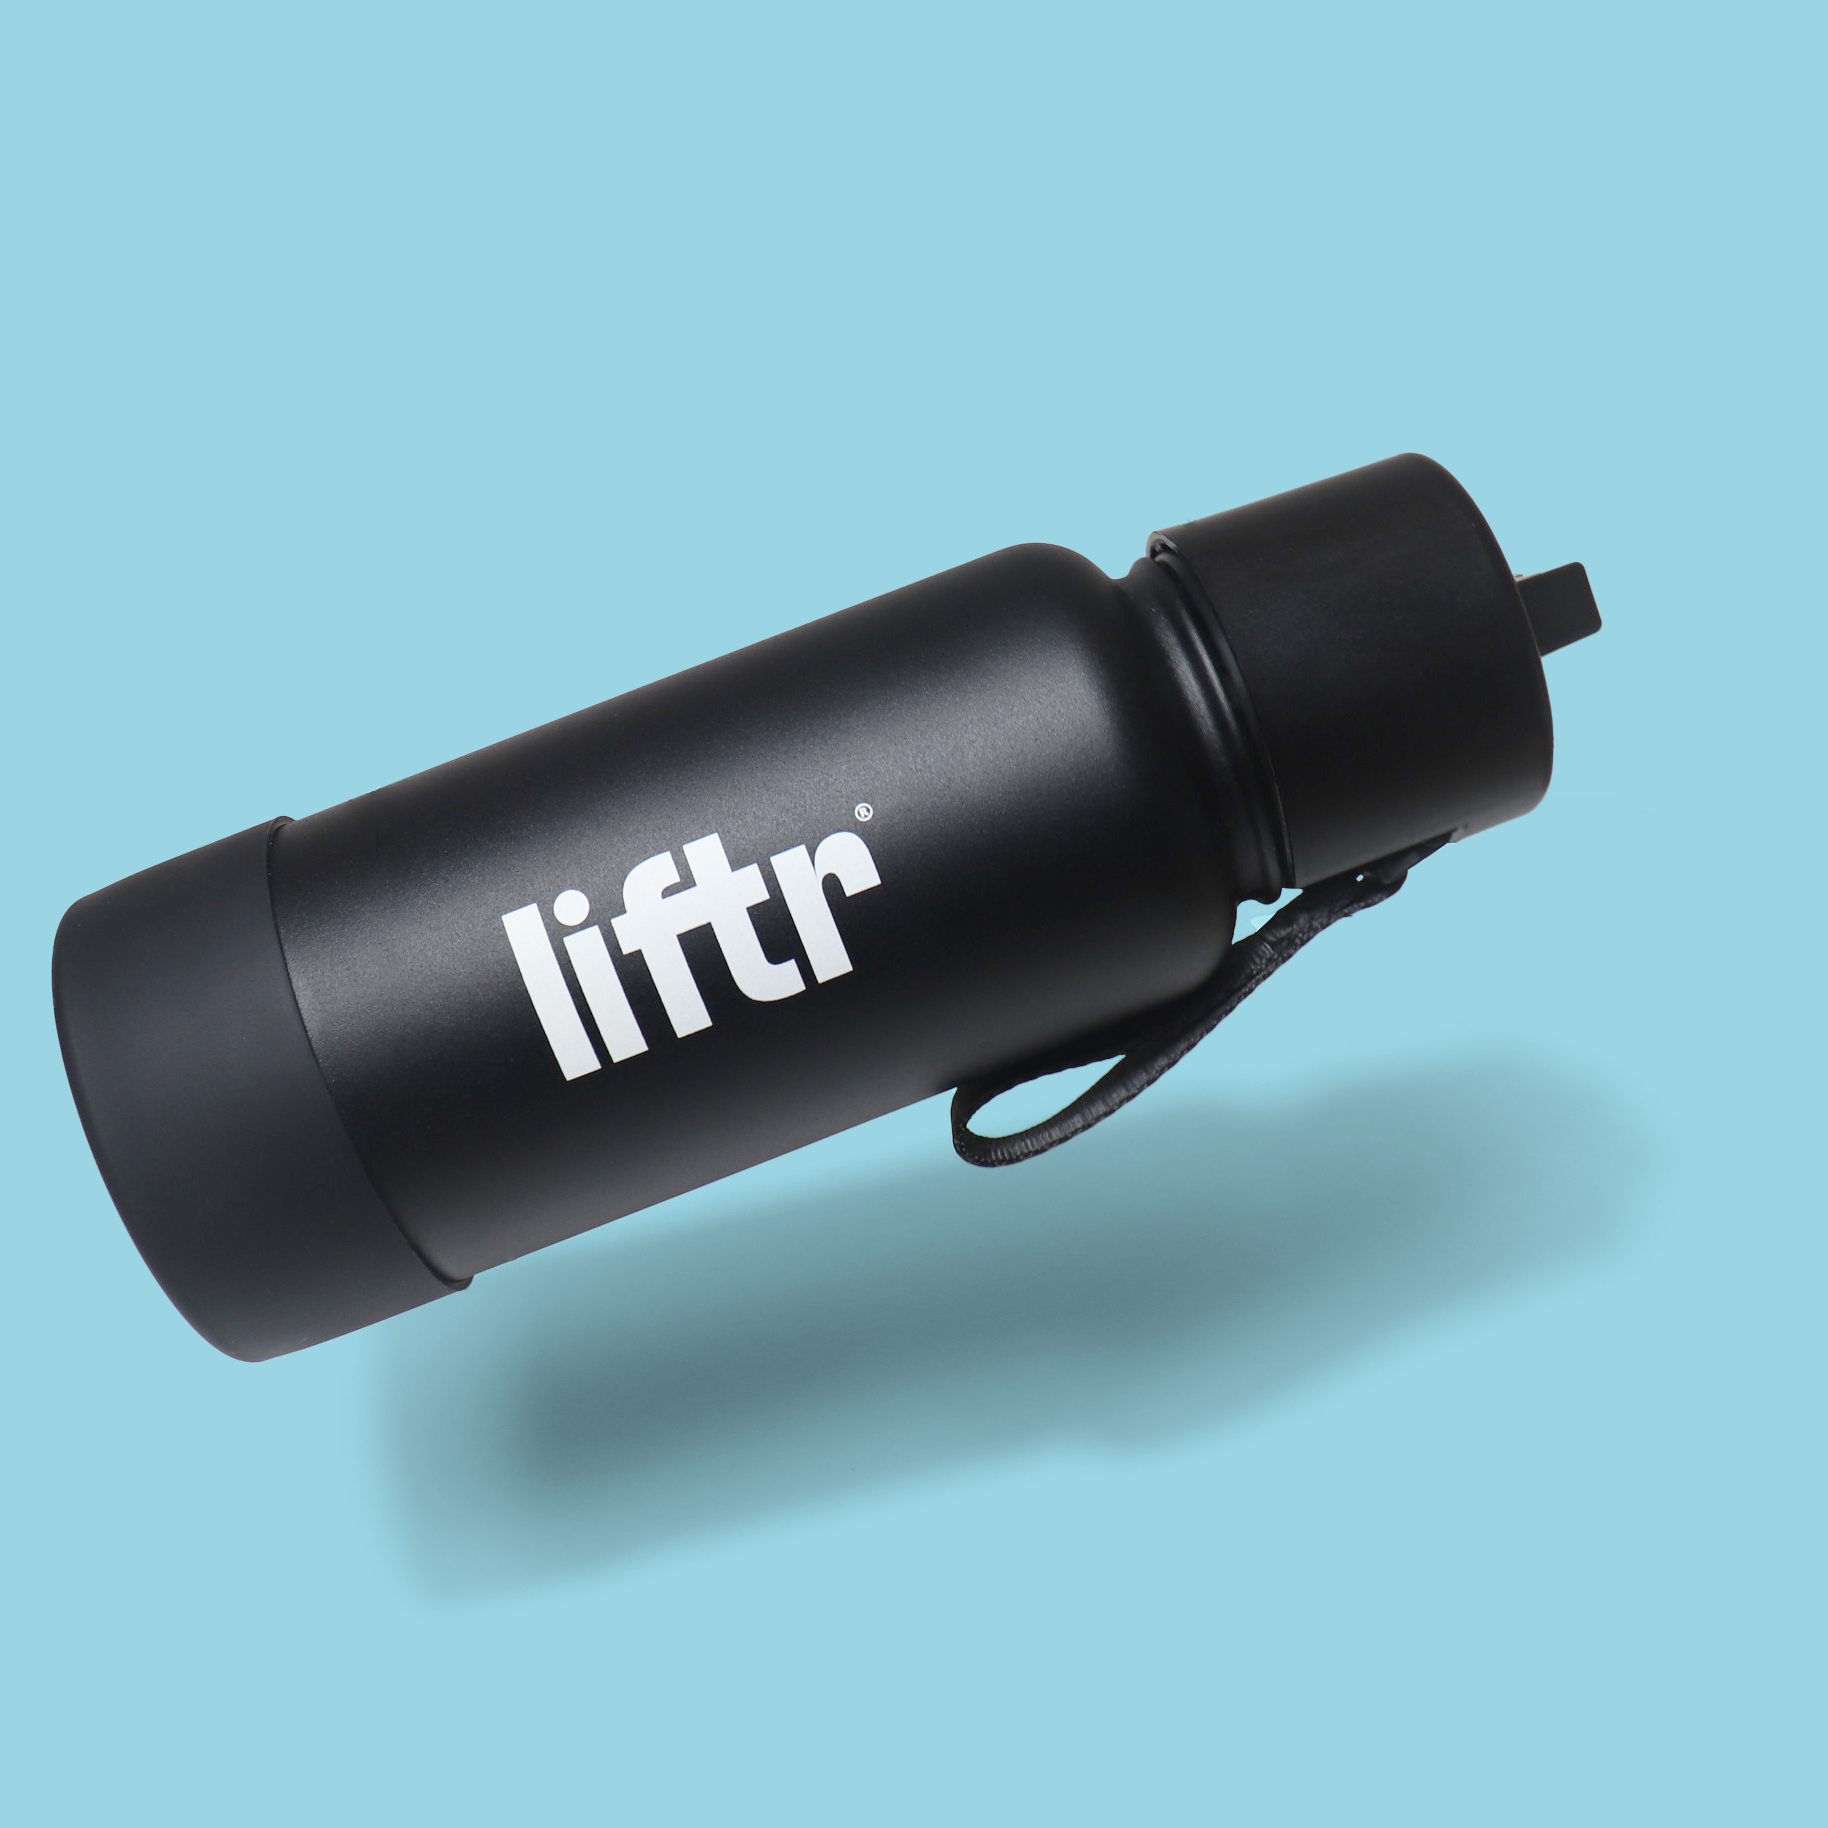 the Liftr bottle